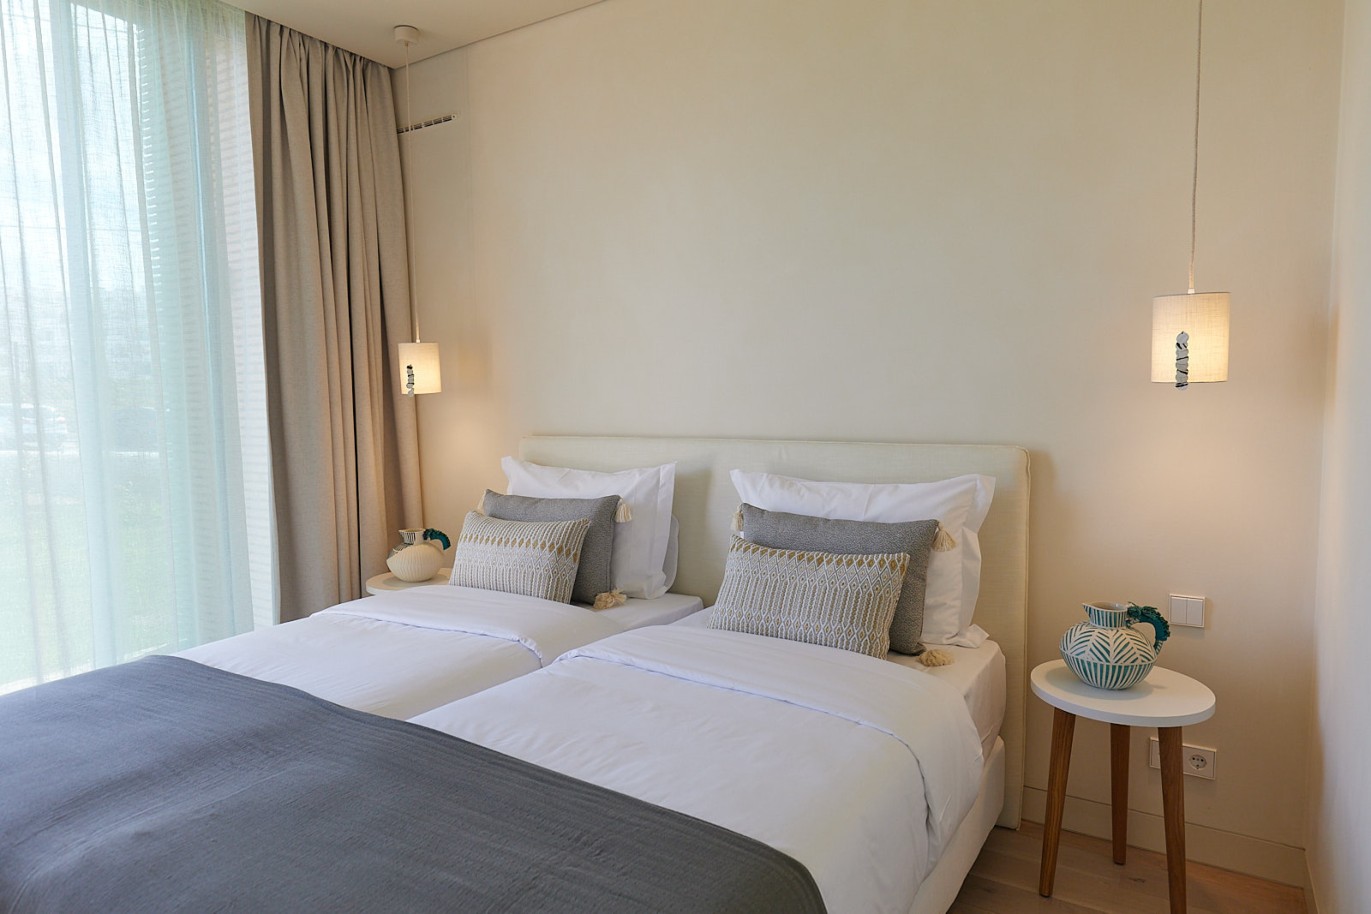 3 bedroom apartment in resort, for sale in Porches, Algarve_228604